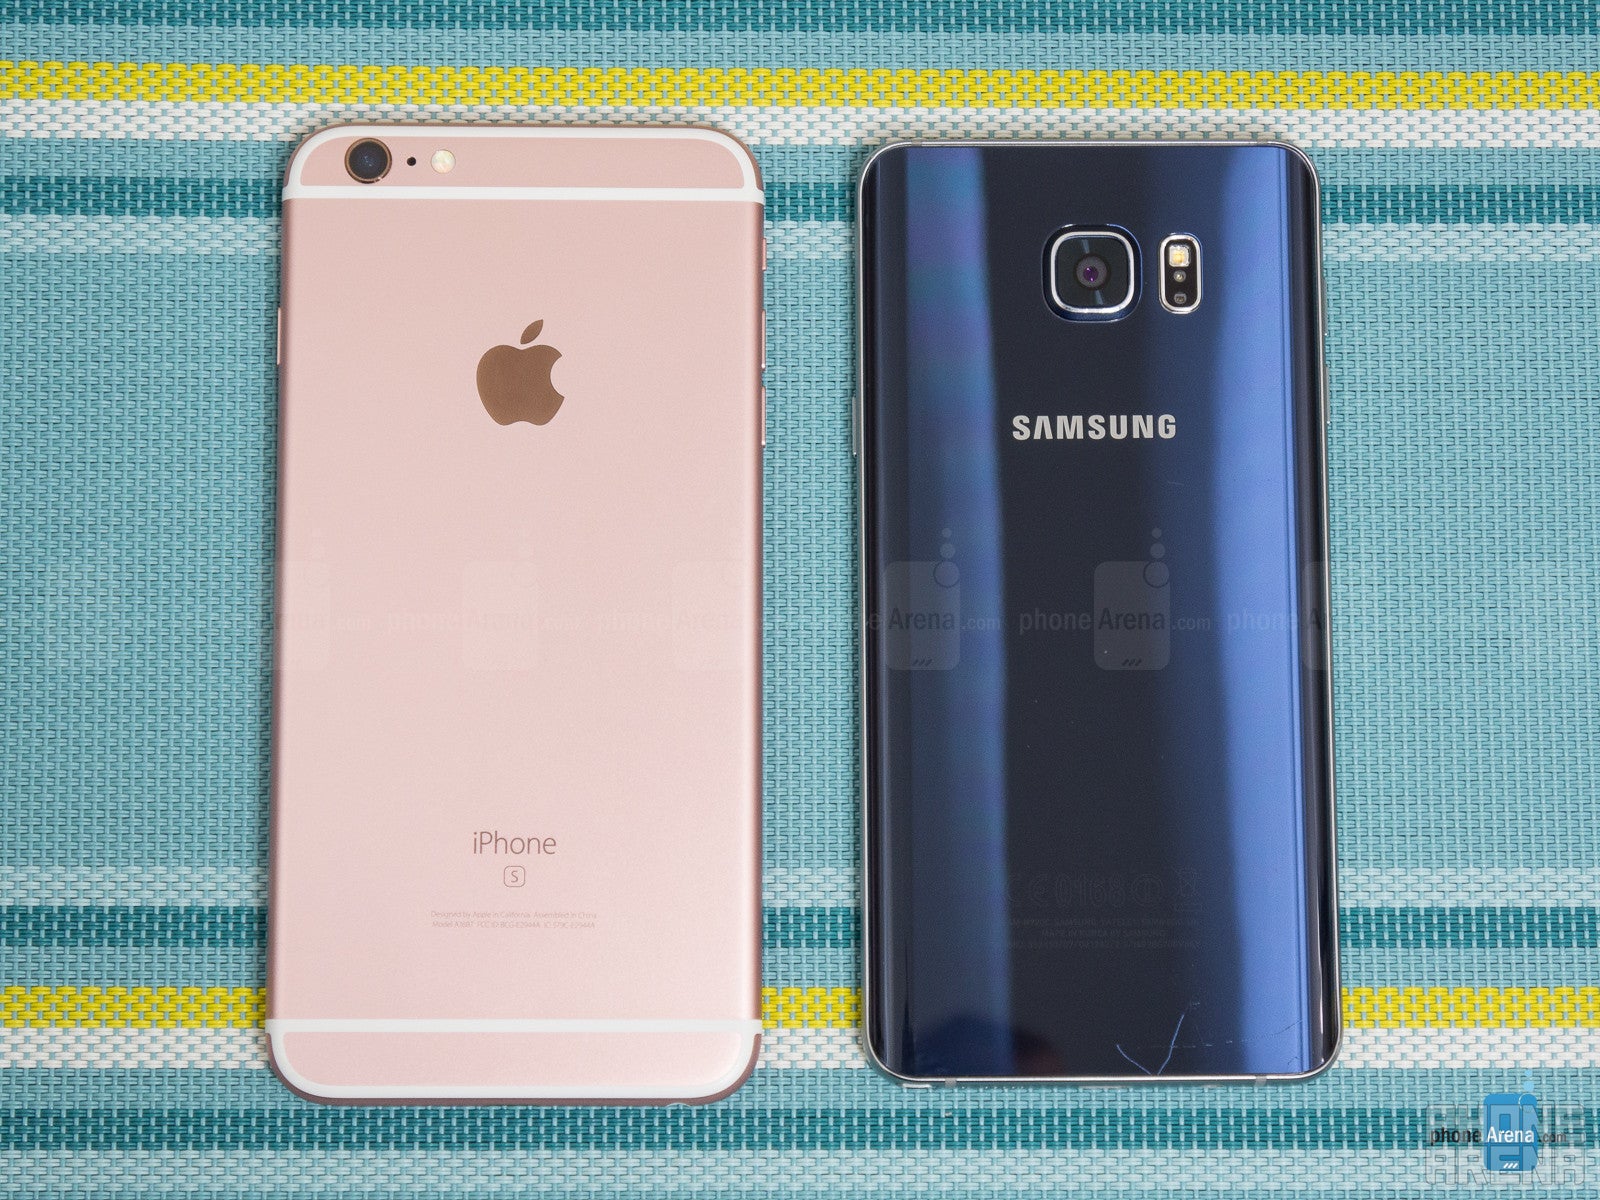 Apple iPhone 6s Plus vs Samsung Galaxy Note5